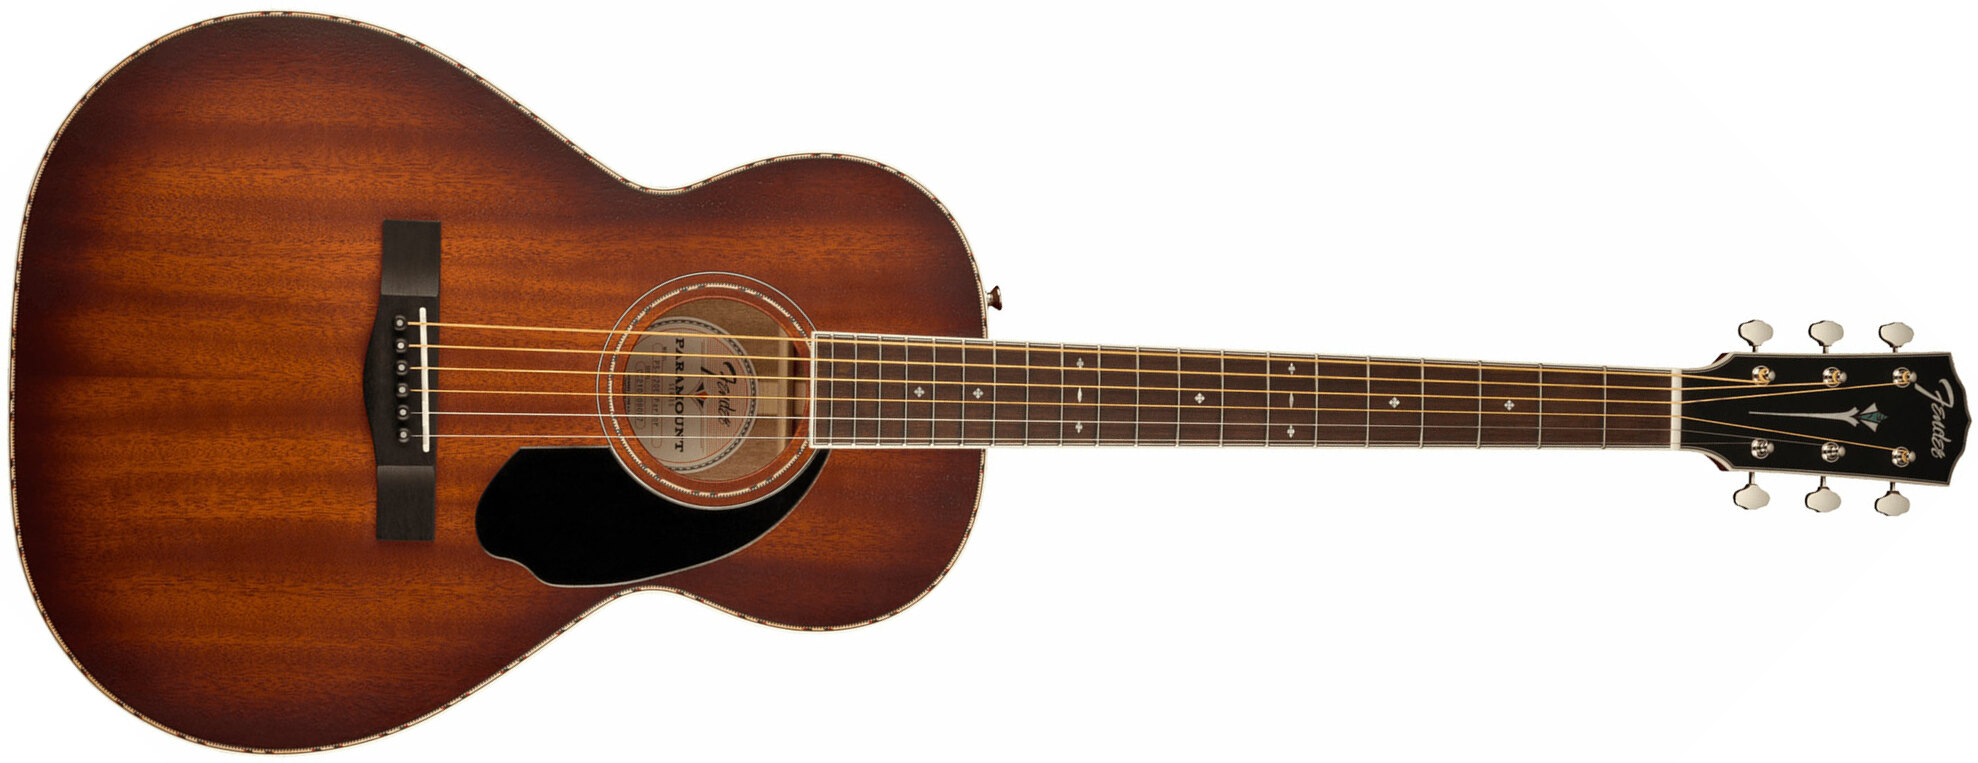 Fender Ps-220e Paramount All Mahogany Parlor Tout Acajou Ova - Aged Cognac Burst - Elektro-akoestische gitaar - Main picture